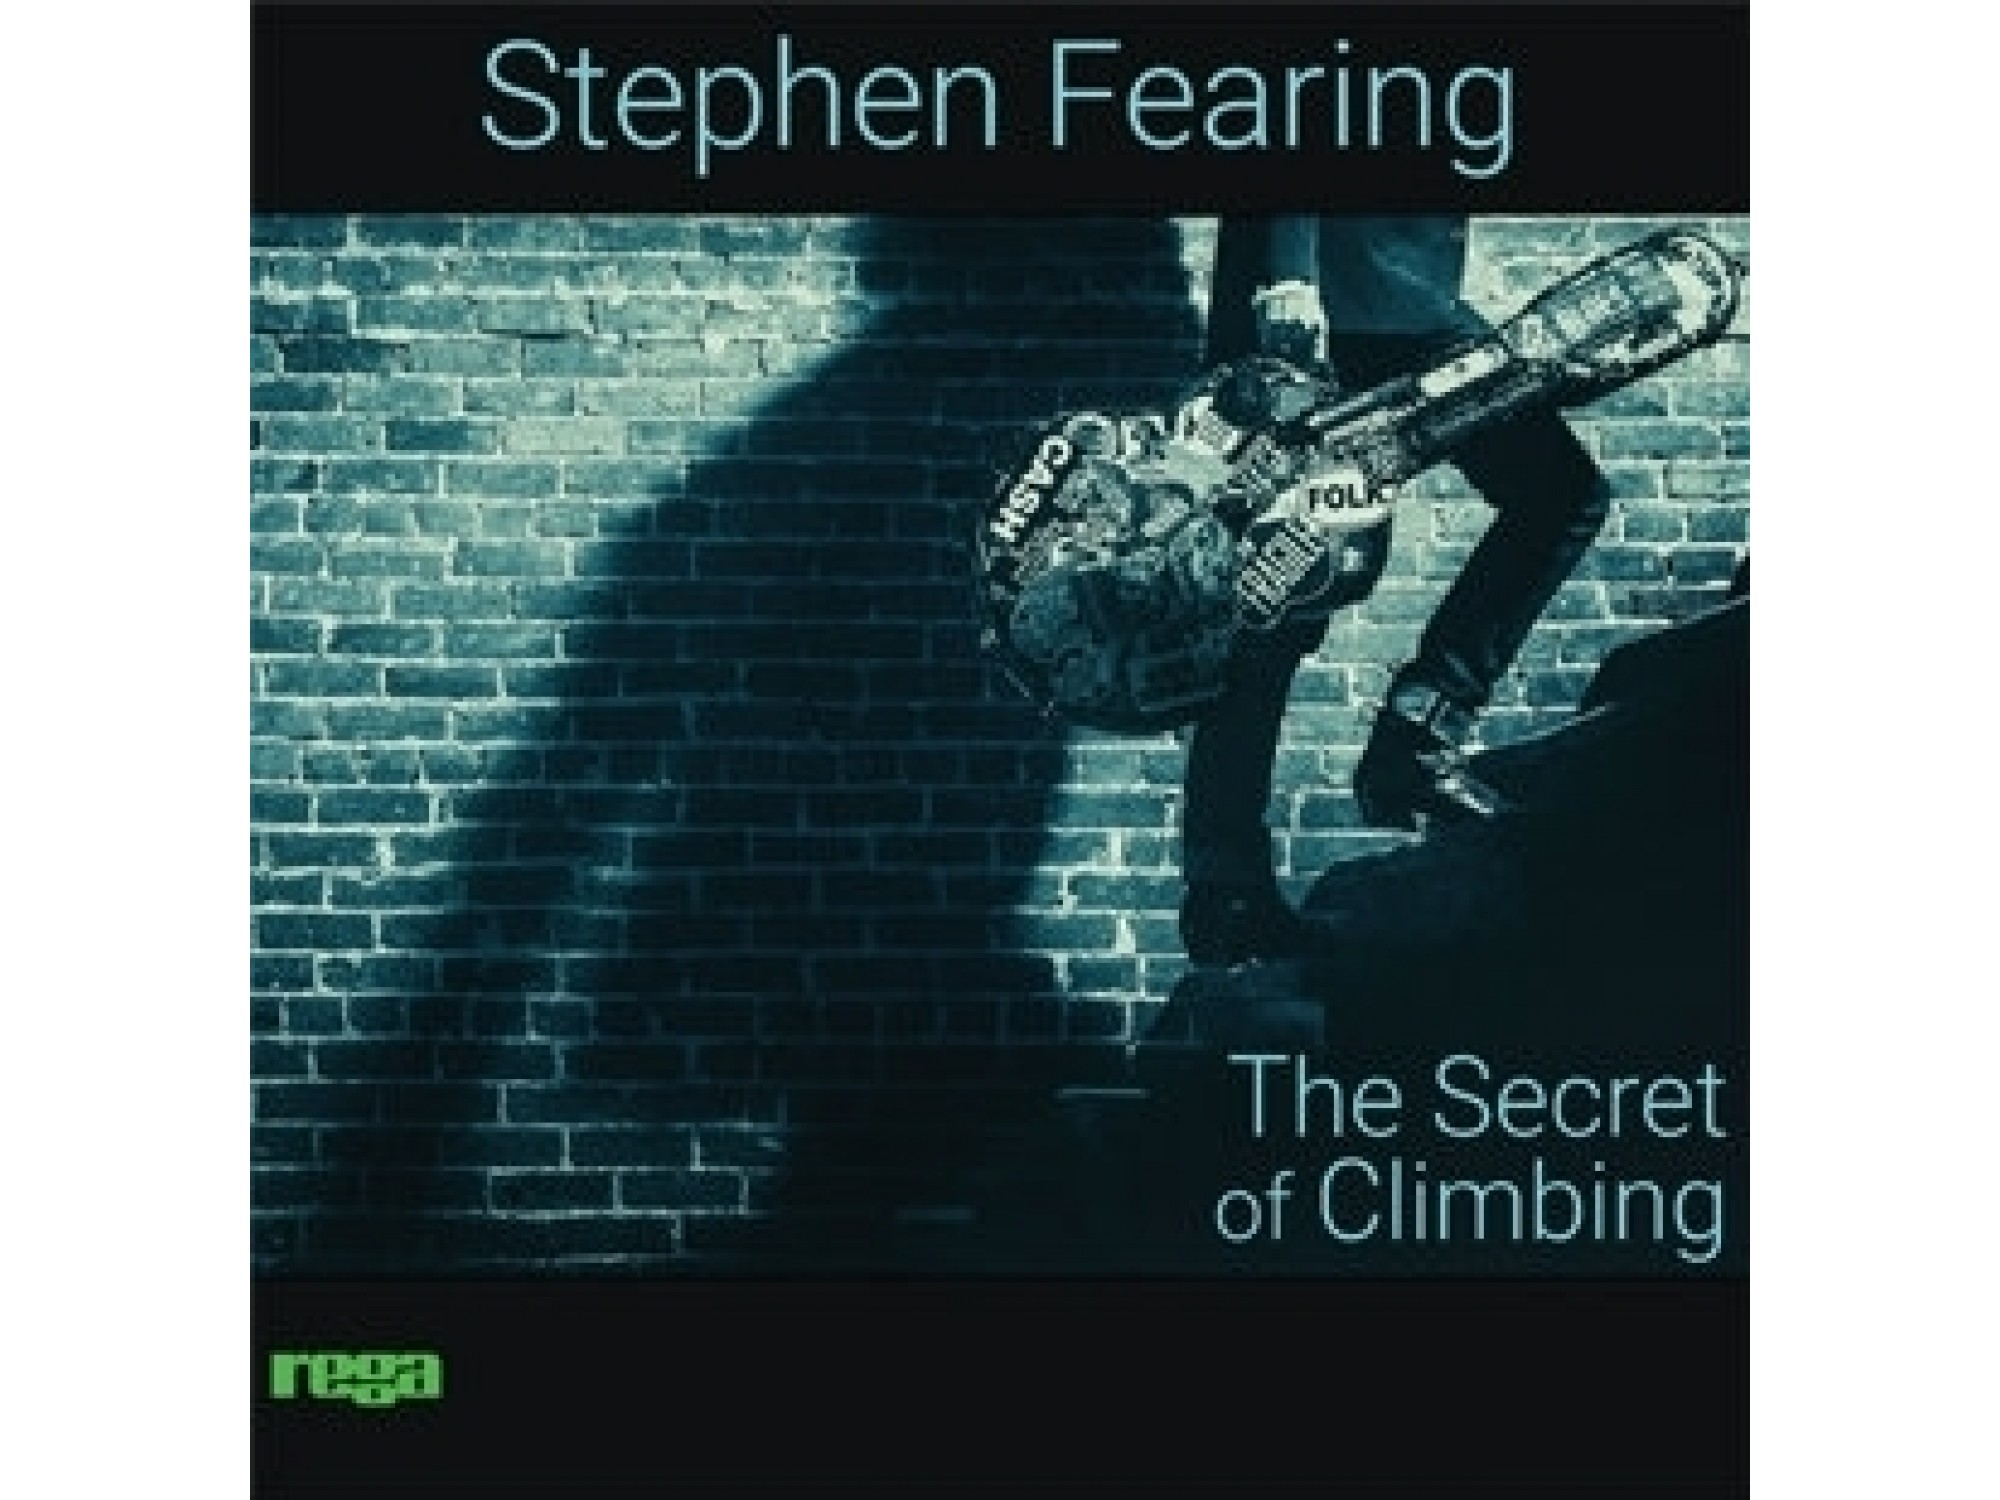 Stephen Fearing - The Secret Of Climbing (REGA) [LP]